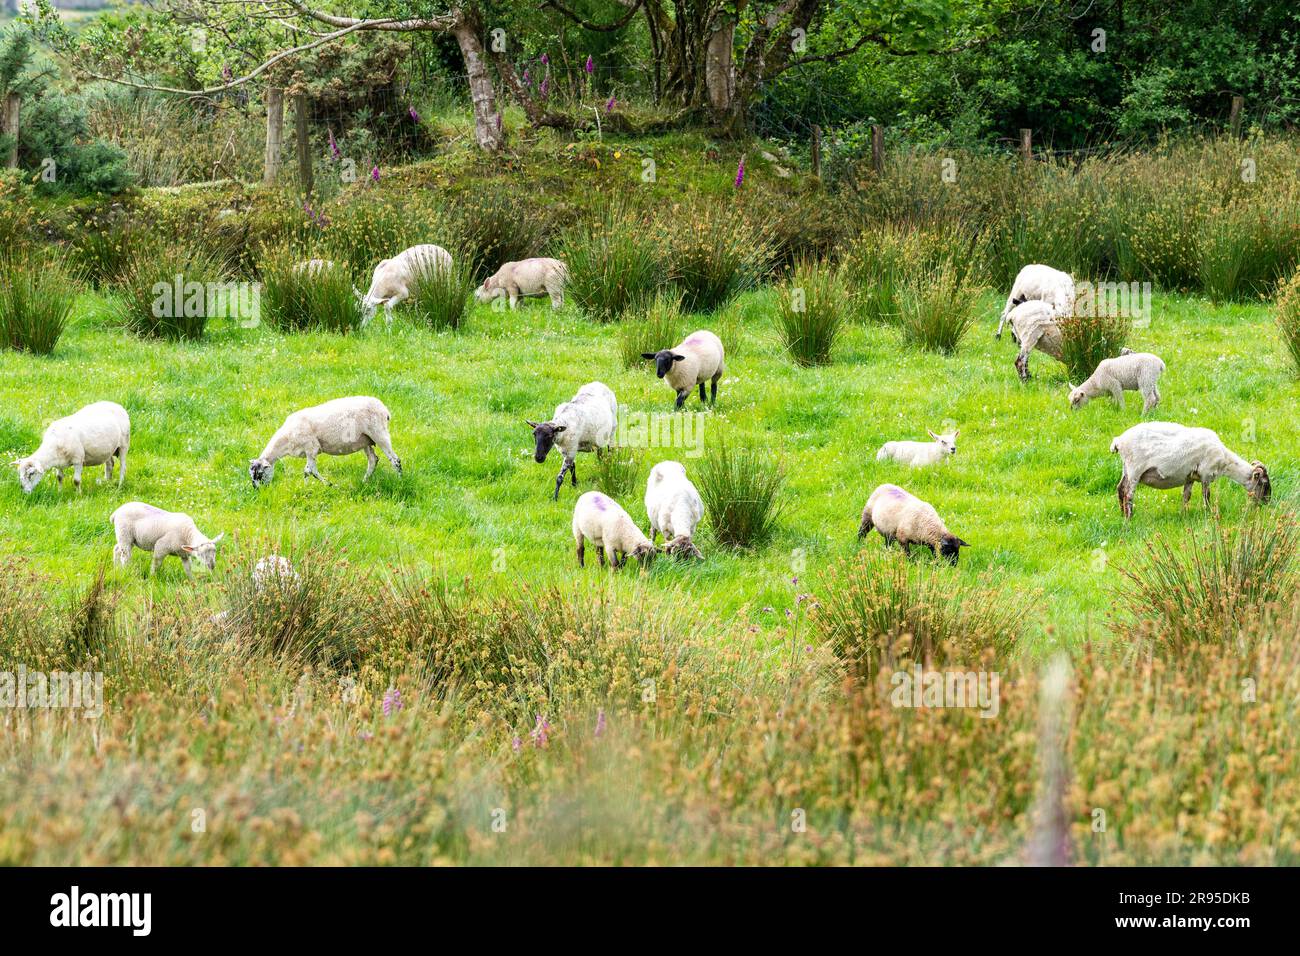 Newly sheared sheep grazing in a field in Ballydehob, West Cork, Ireland. Stock Photo